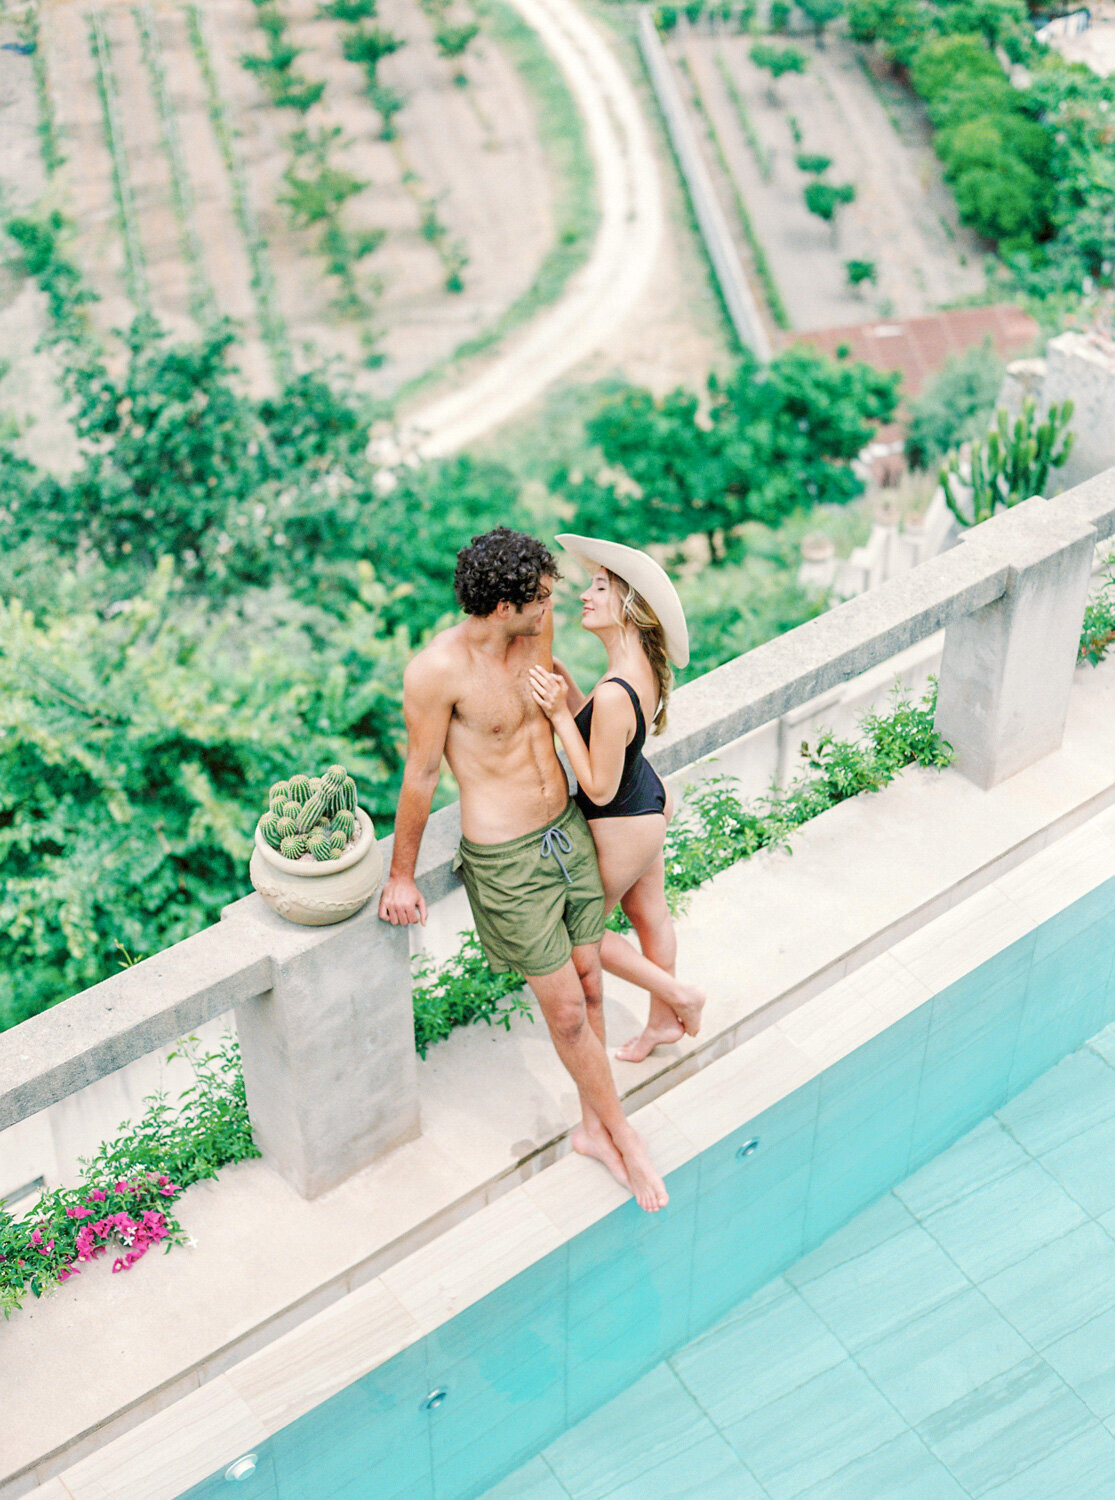 Lifestyle couple photographs at Villa Paola